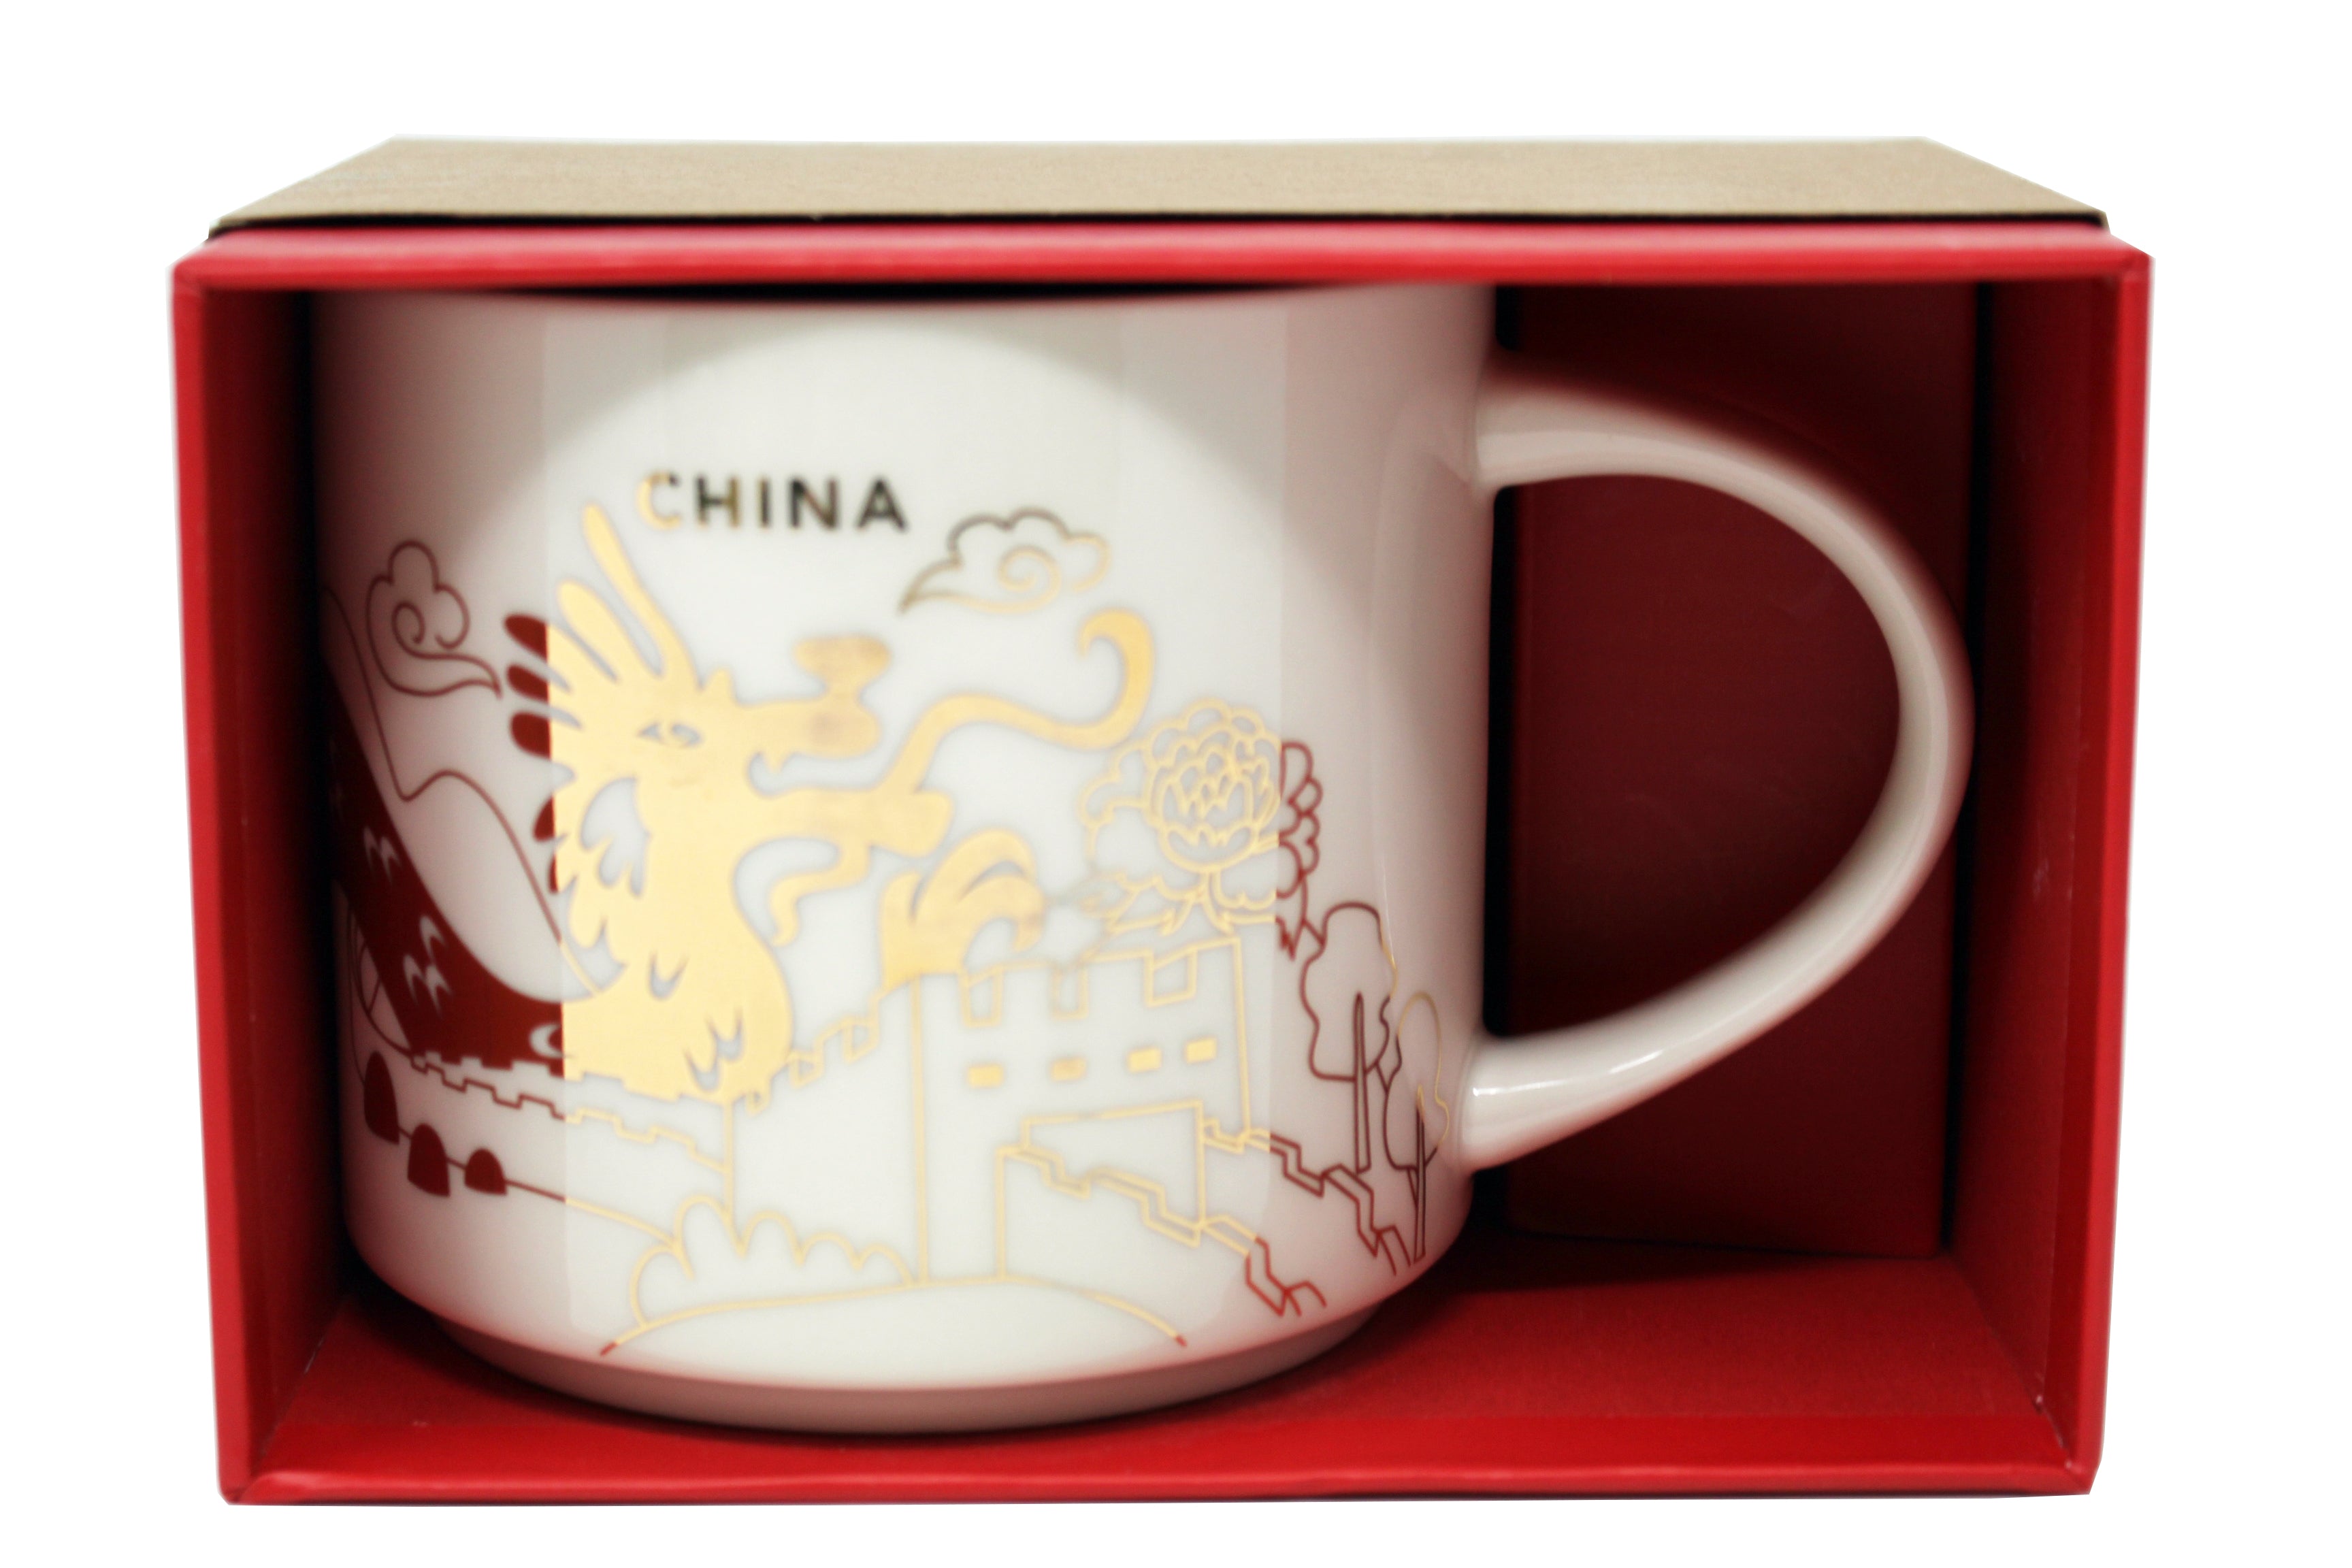 Starbucks You Are Here Series China Ceramic Mug, 14 Oz